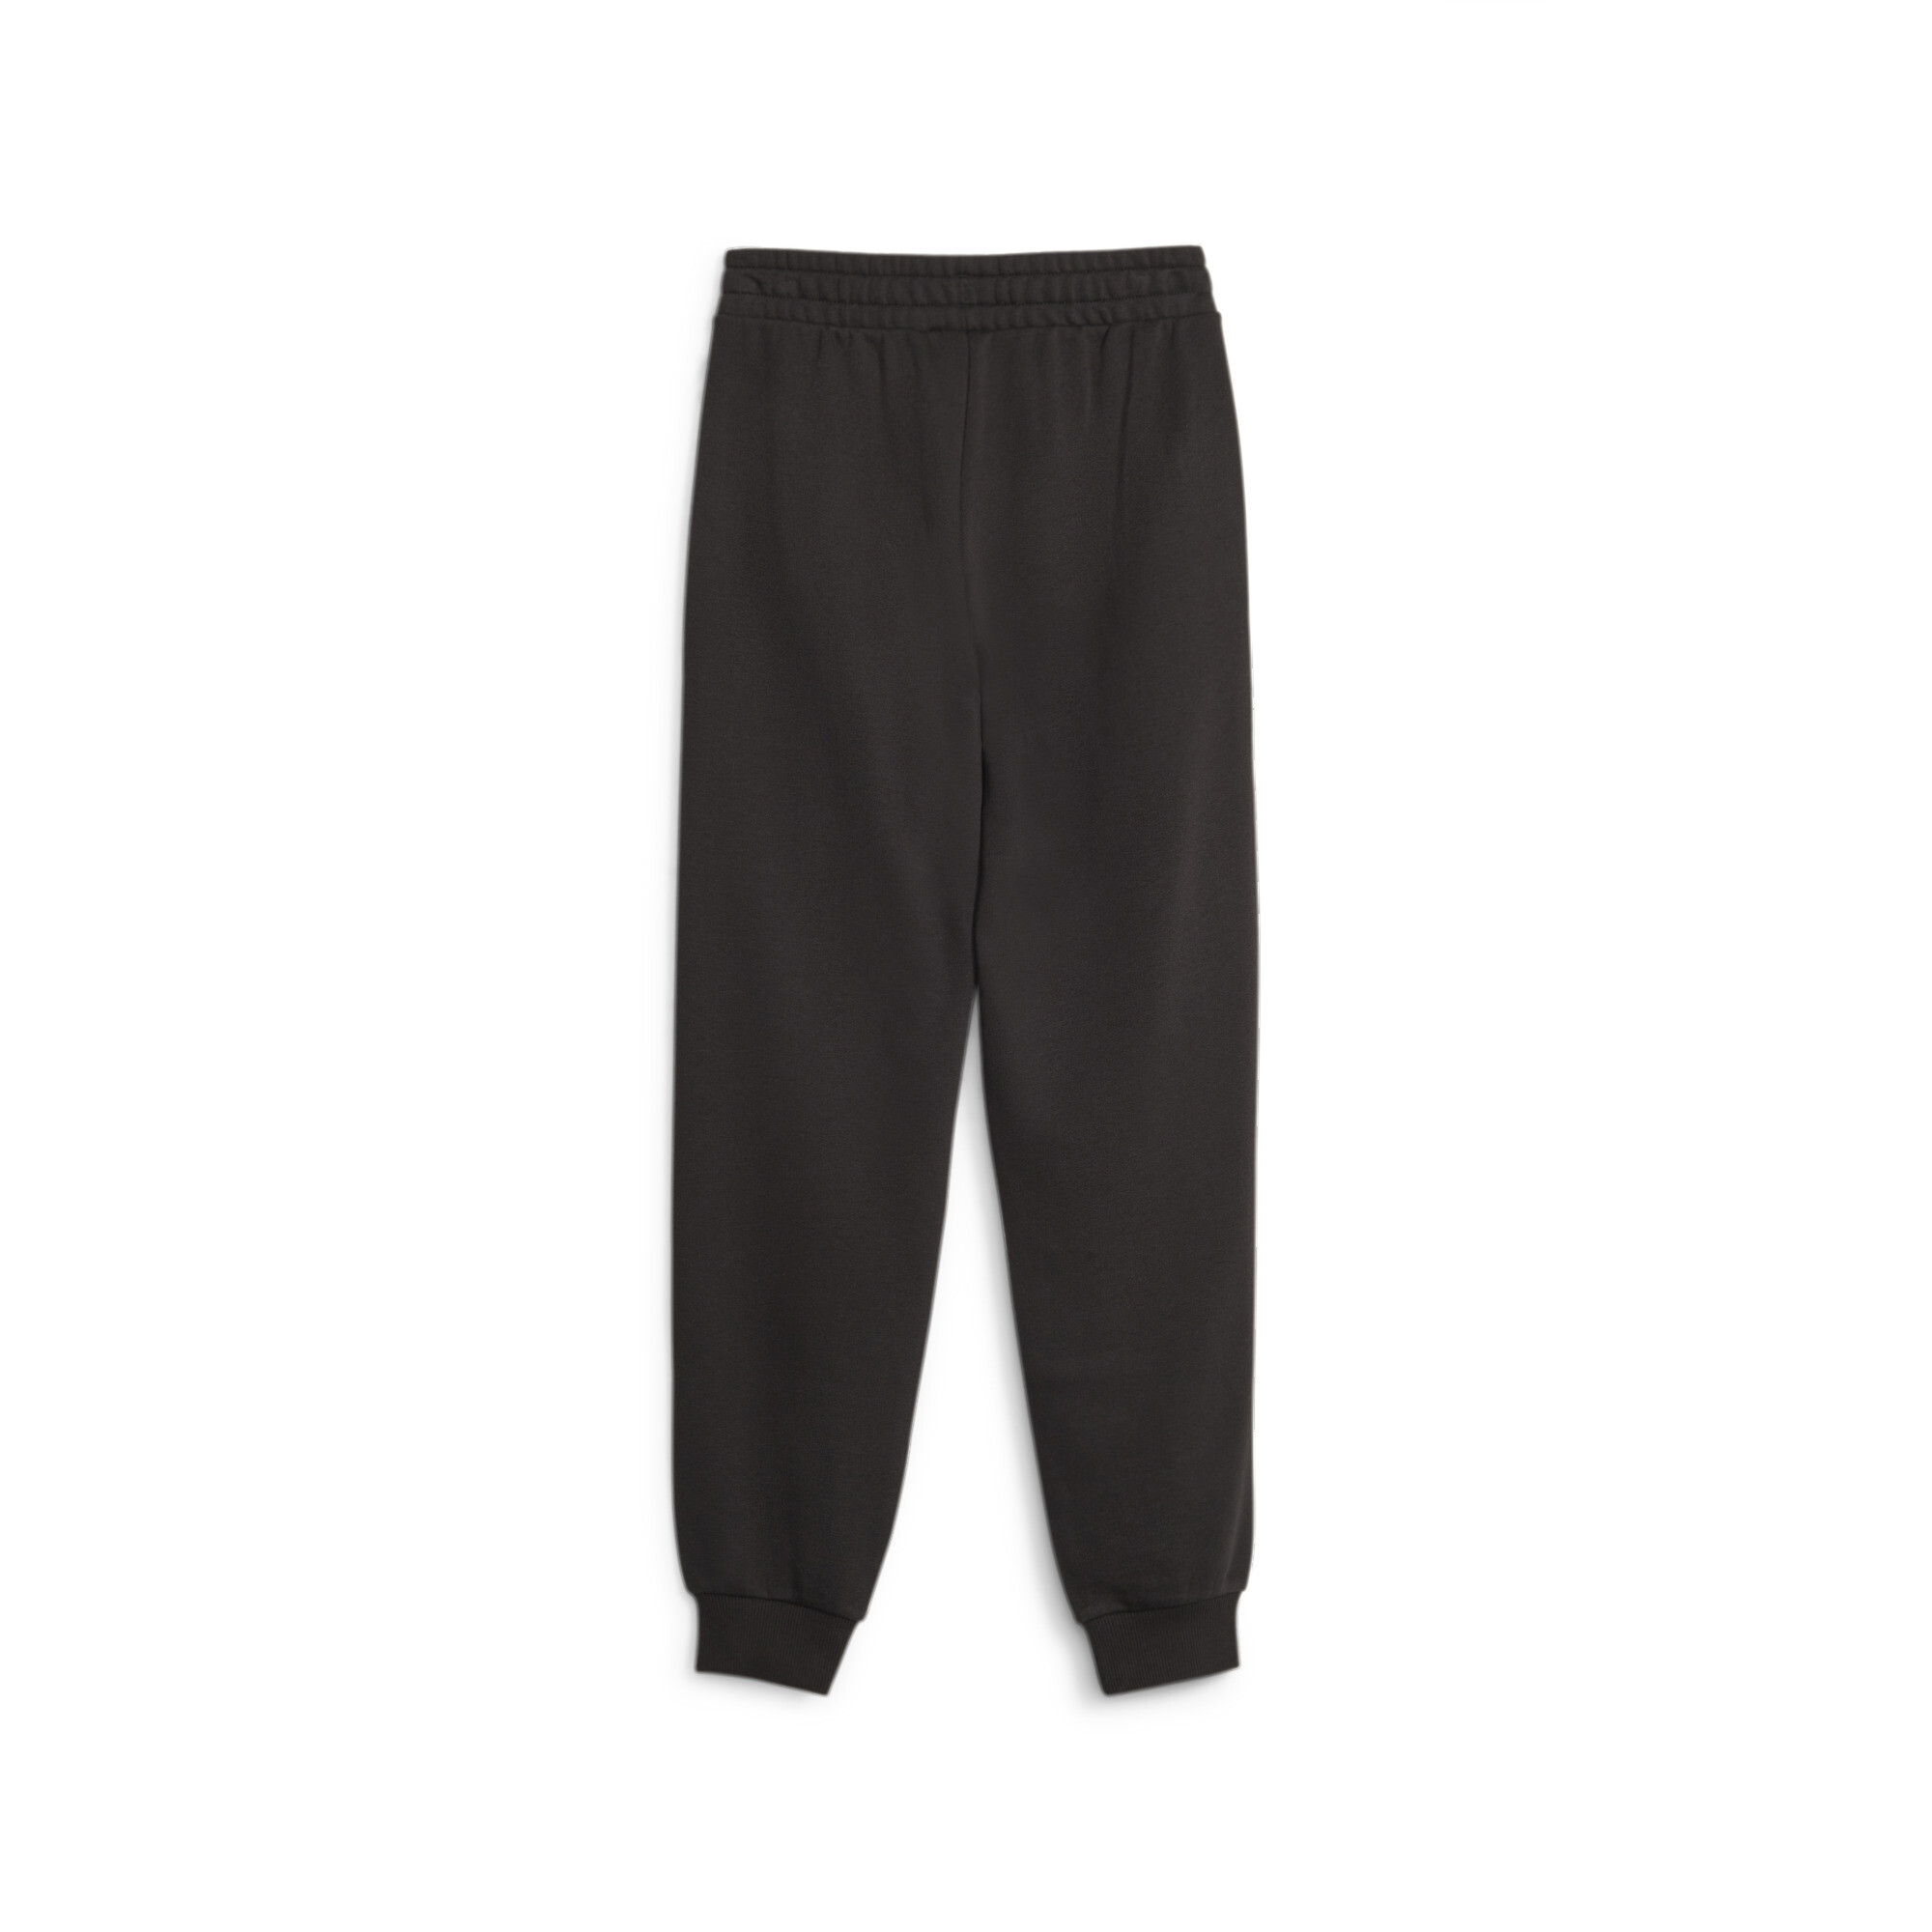 PUMA X SPONGEBOB SQUAREPANTS Sweatpants In Black, Size 7-8 Youth